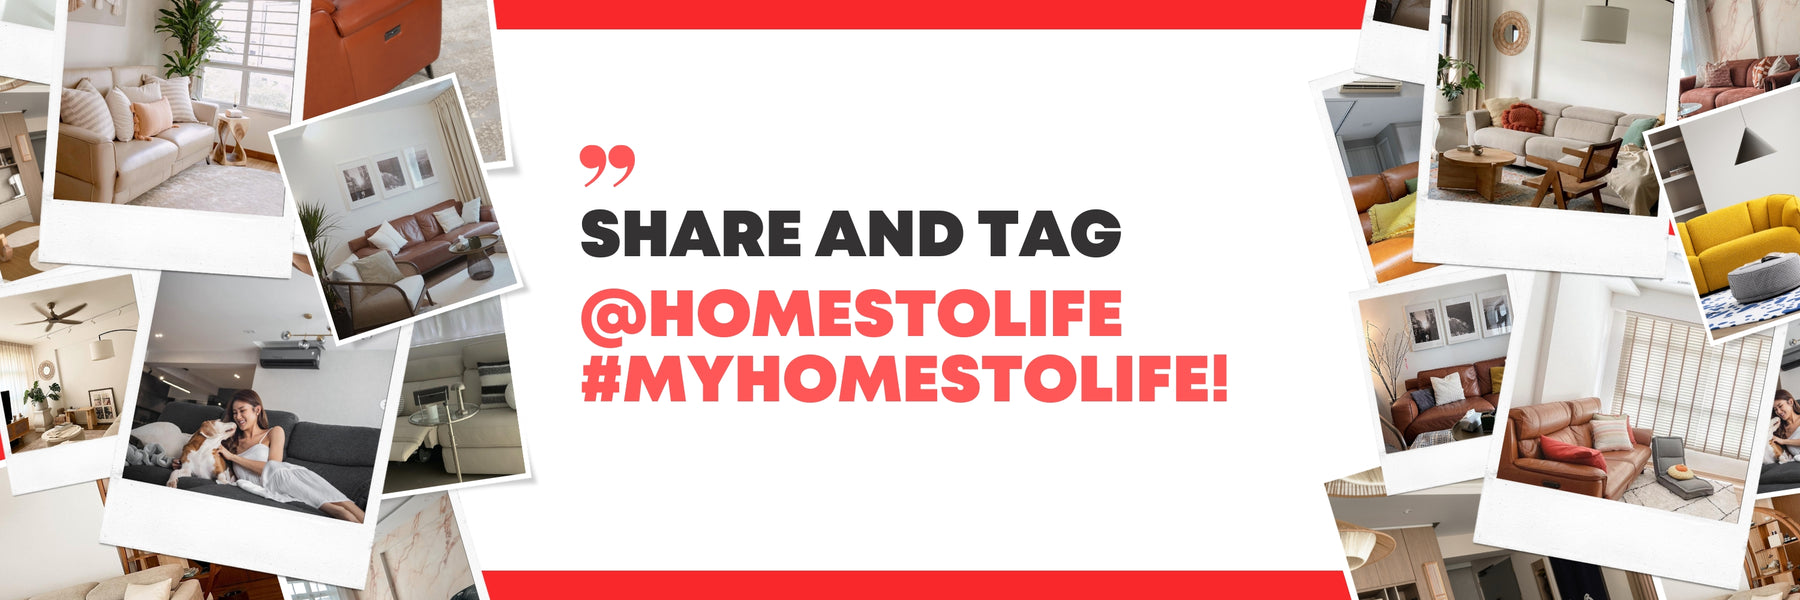 Share and Tag @homestolife #MyHomesToLife! - HomesToLife